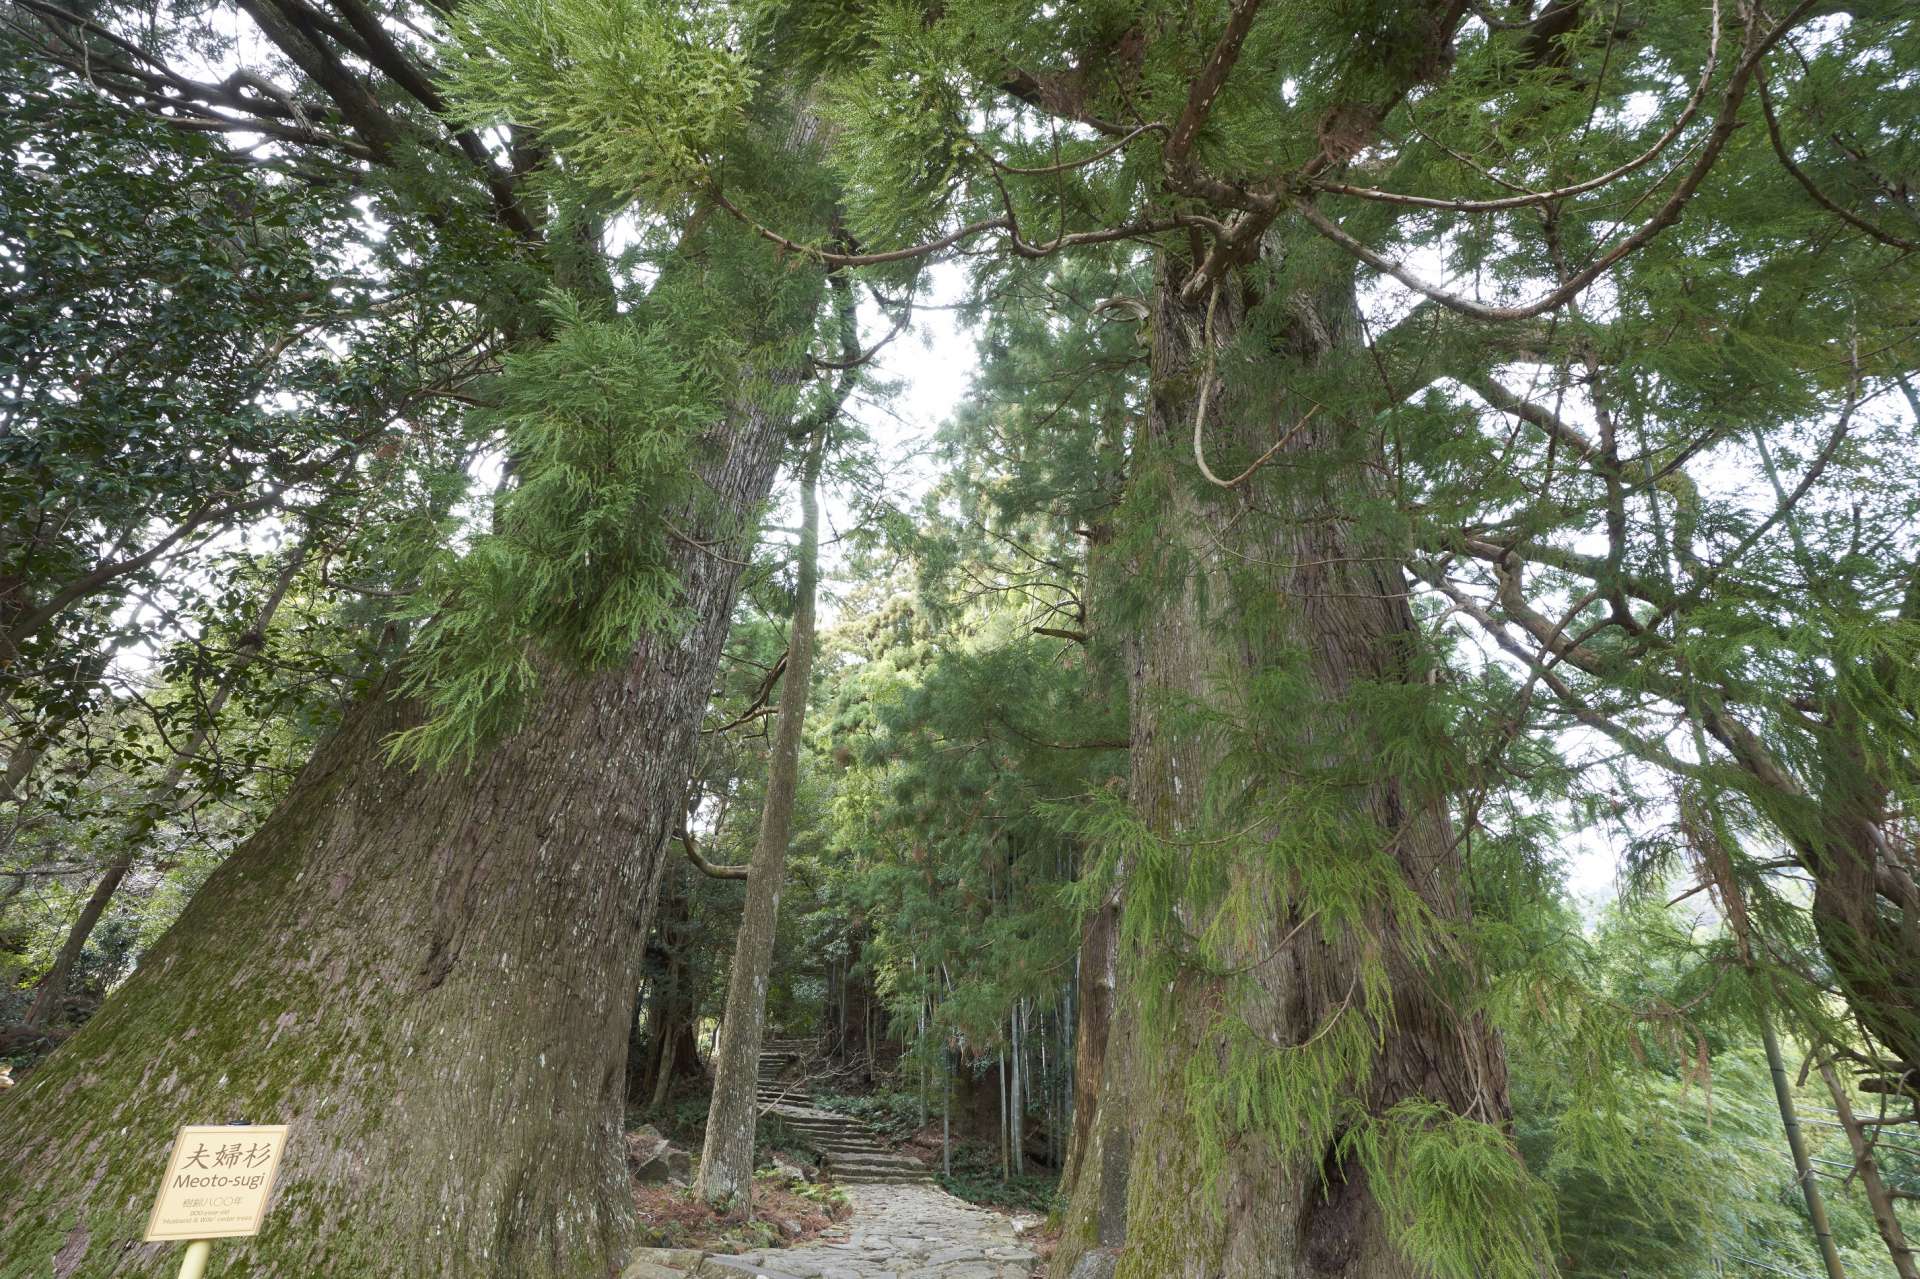  Meoto-sugi (wedded Japanese cedar), a pair of 800-year-old Japanese cedar trees